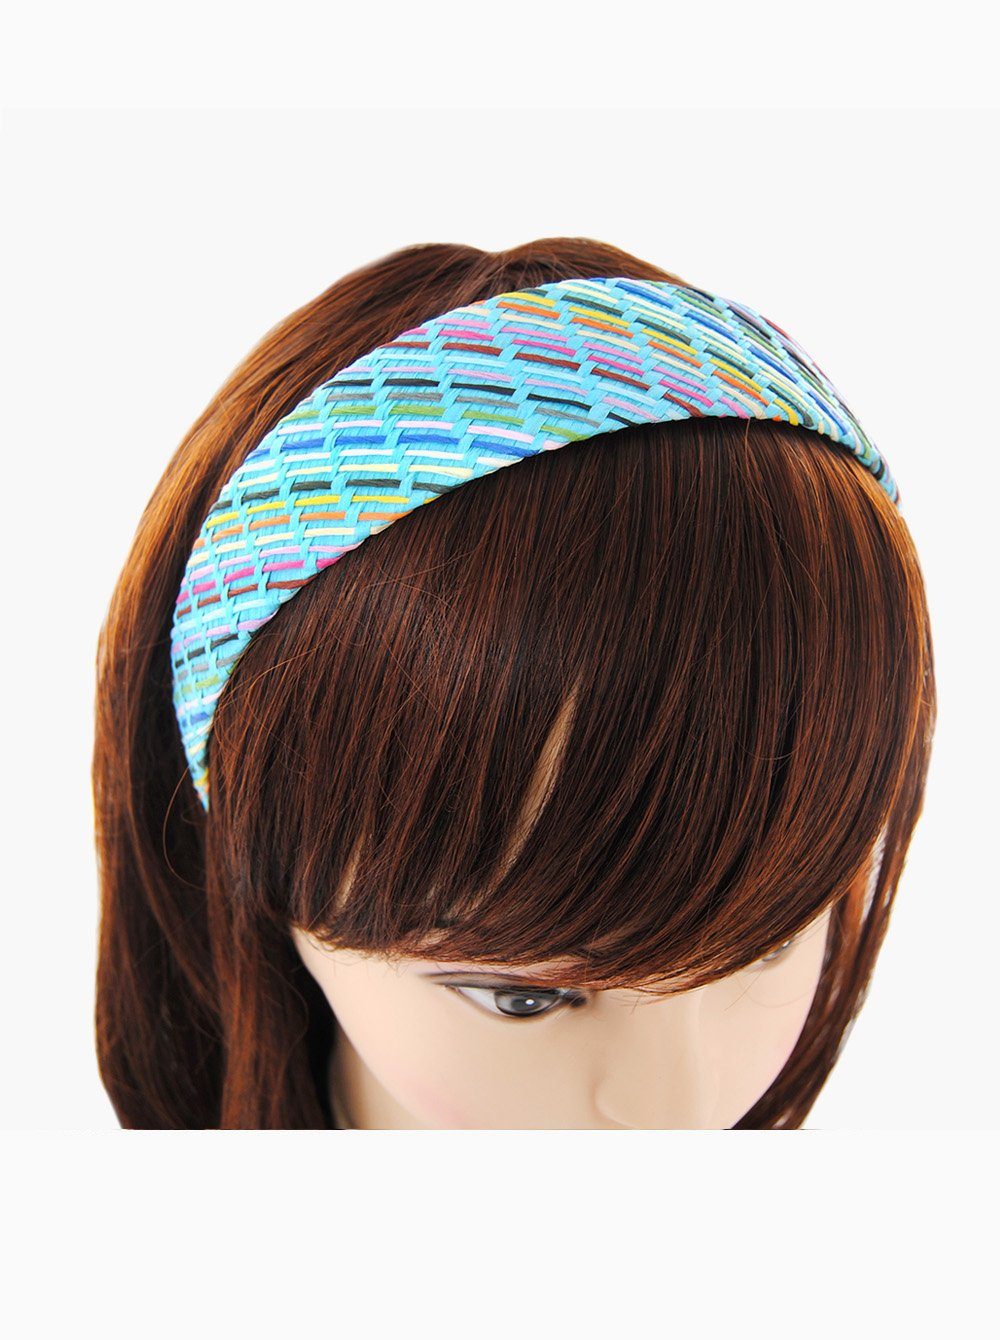 Sommerlich Oberfläche, Haarreif Damen Blau-Bunt Haareifen axy in mit Haarreif geflochtener Haarband Bast-Optik Breiter